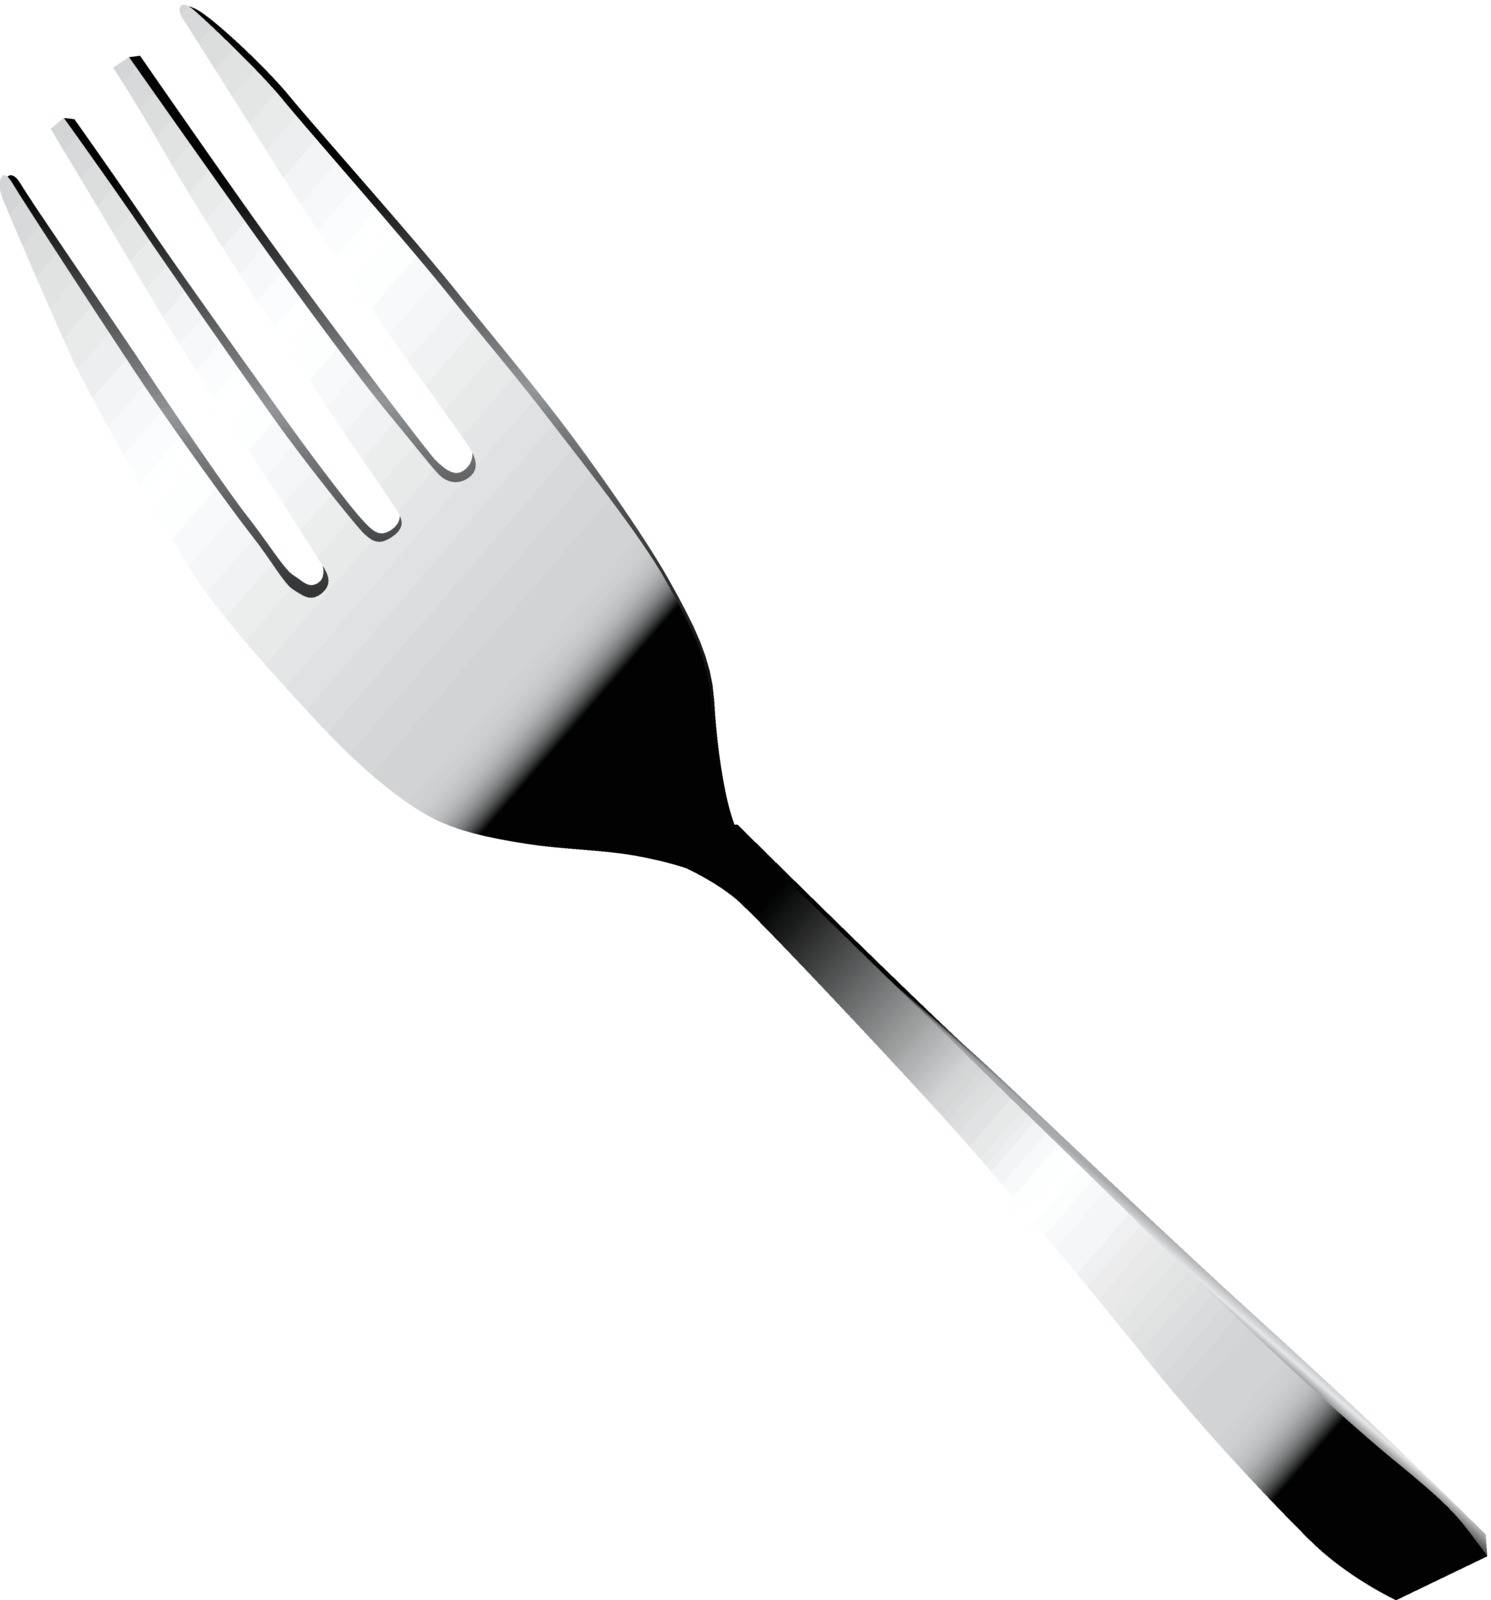 Steel fork by VIPDesignUSA